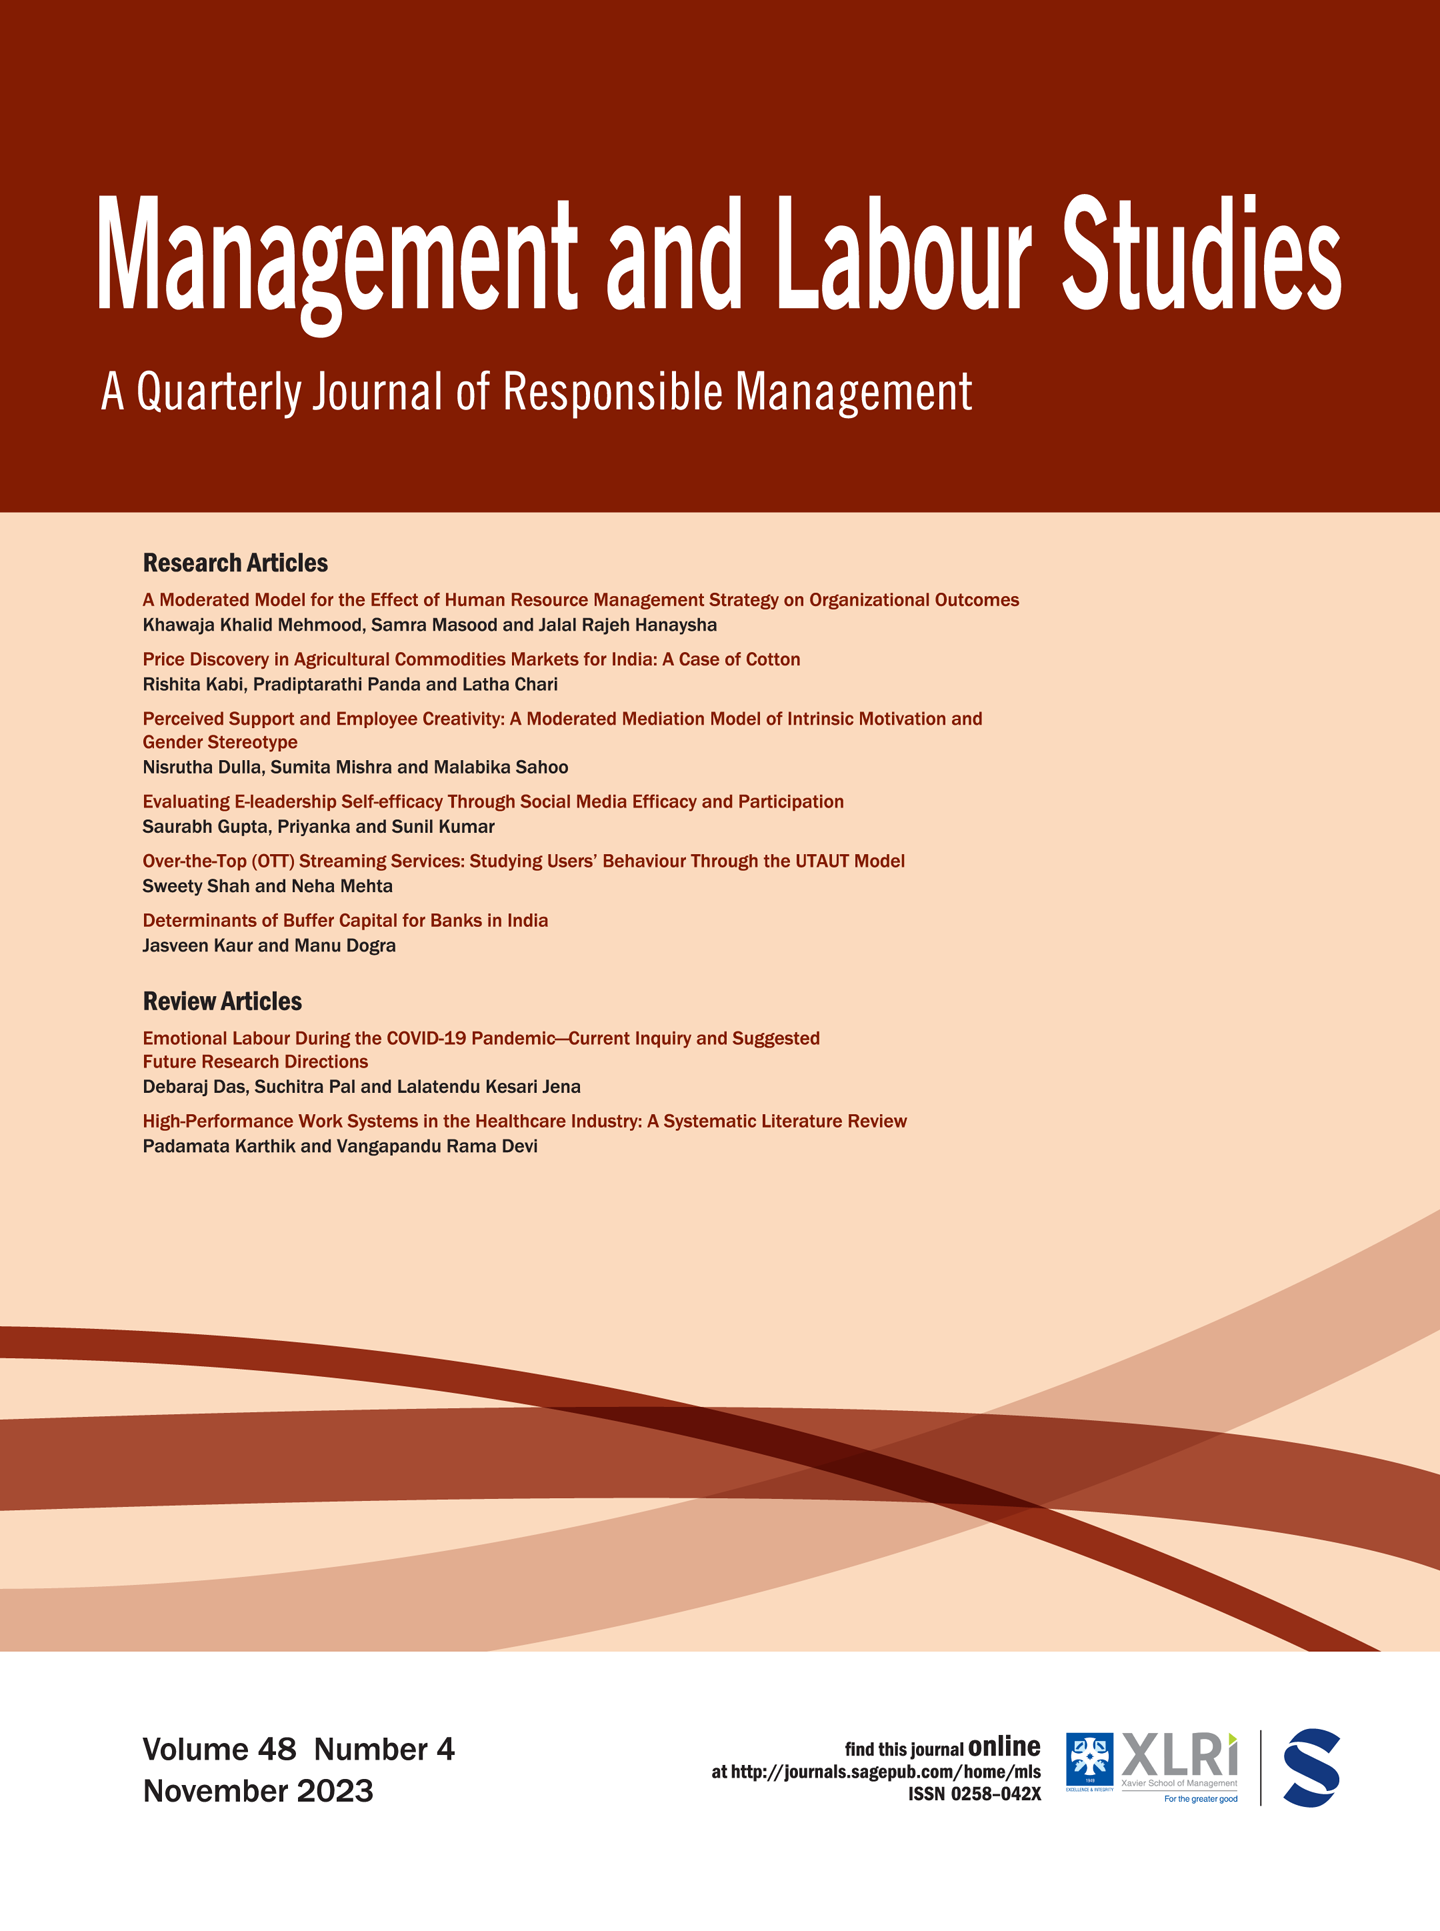 Management and labour studies.